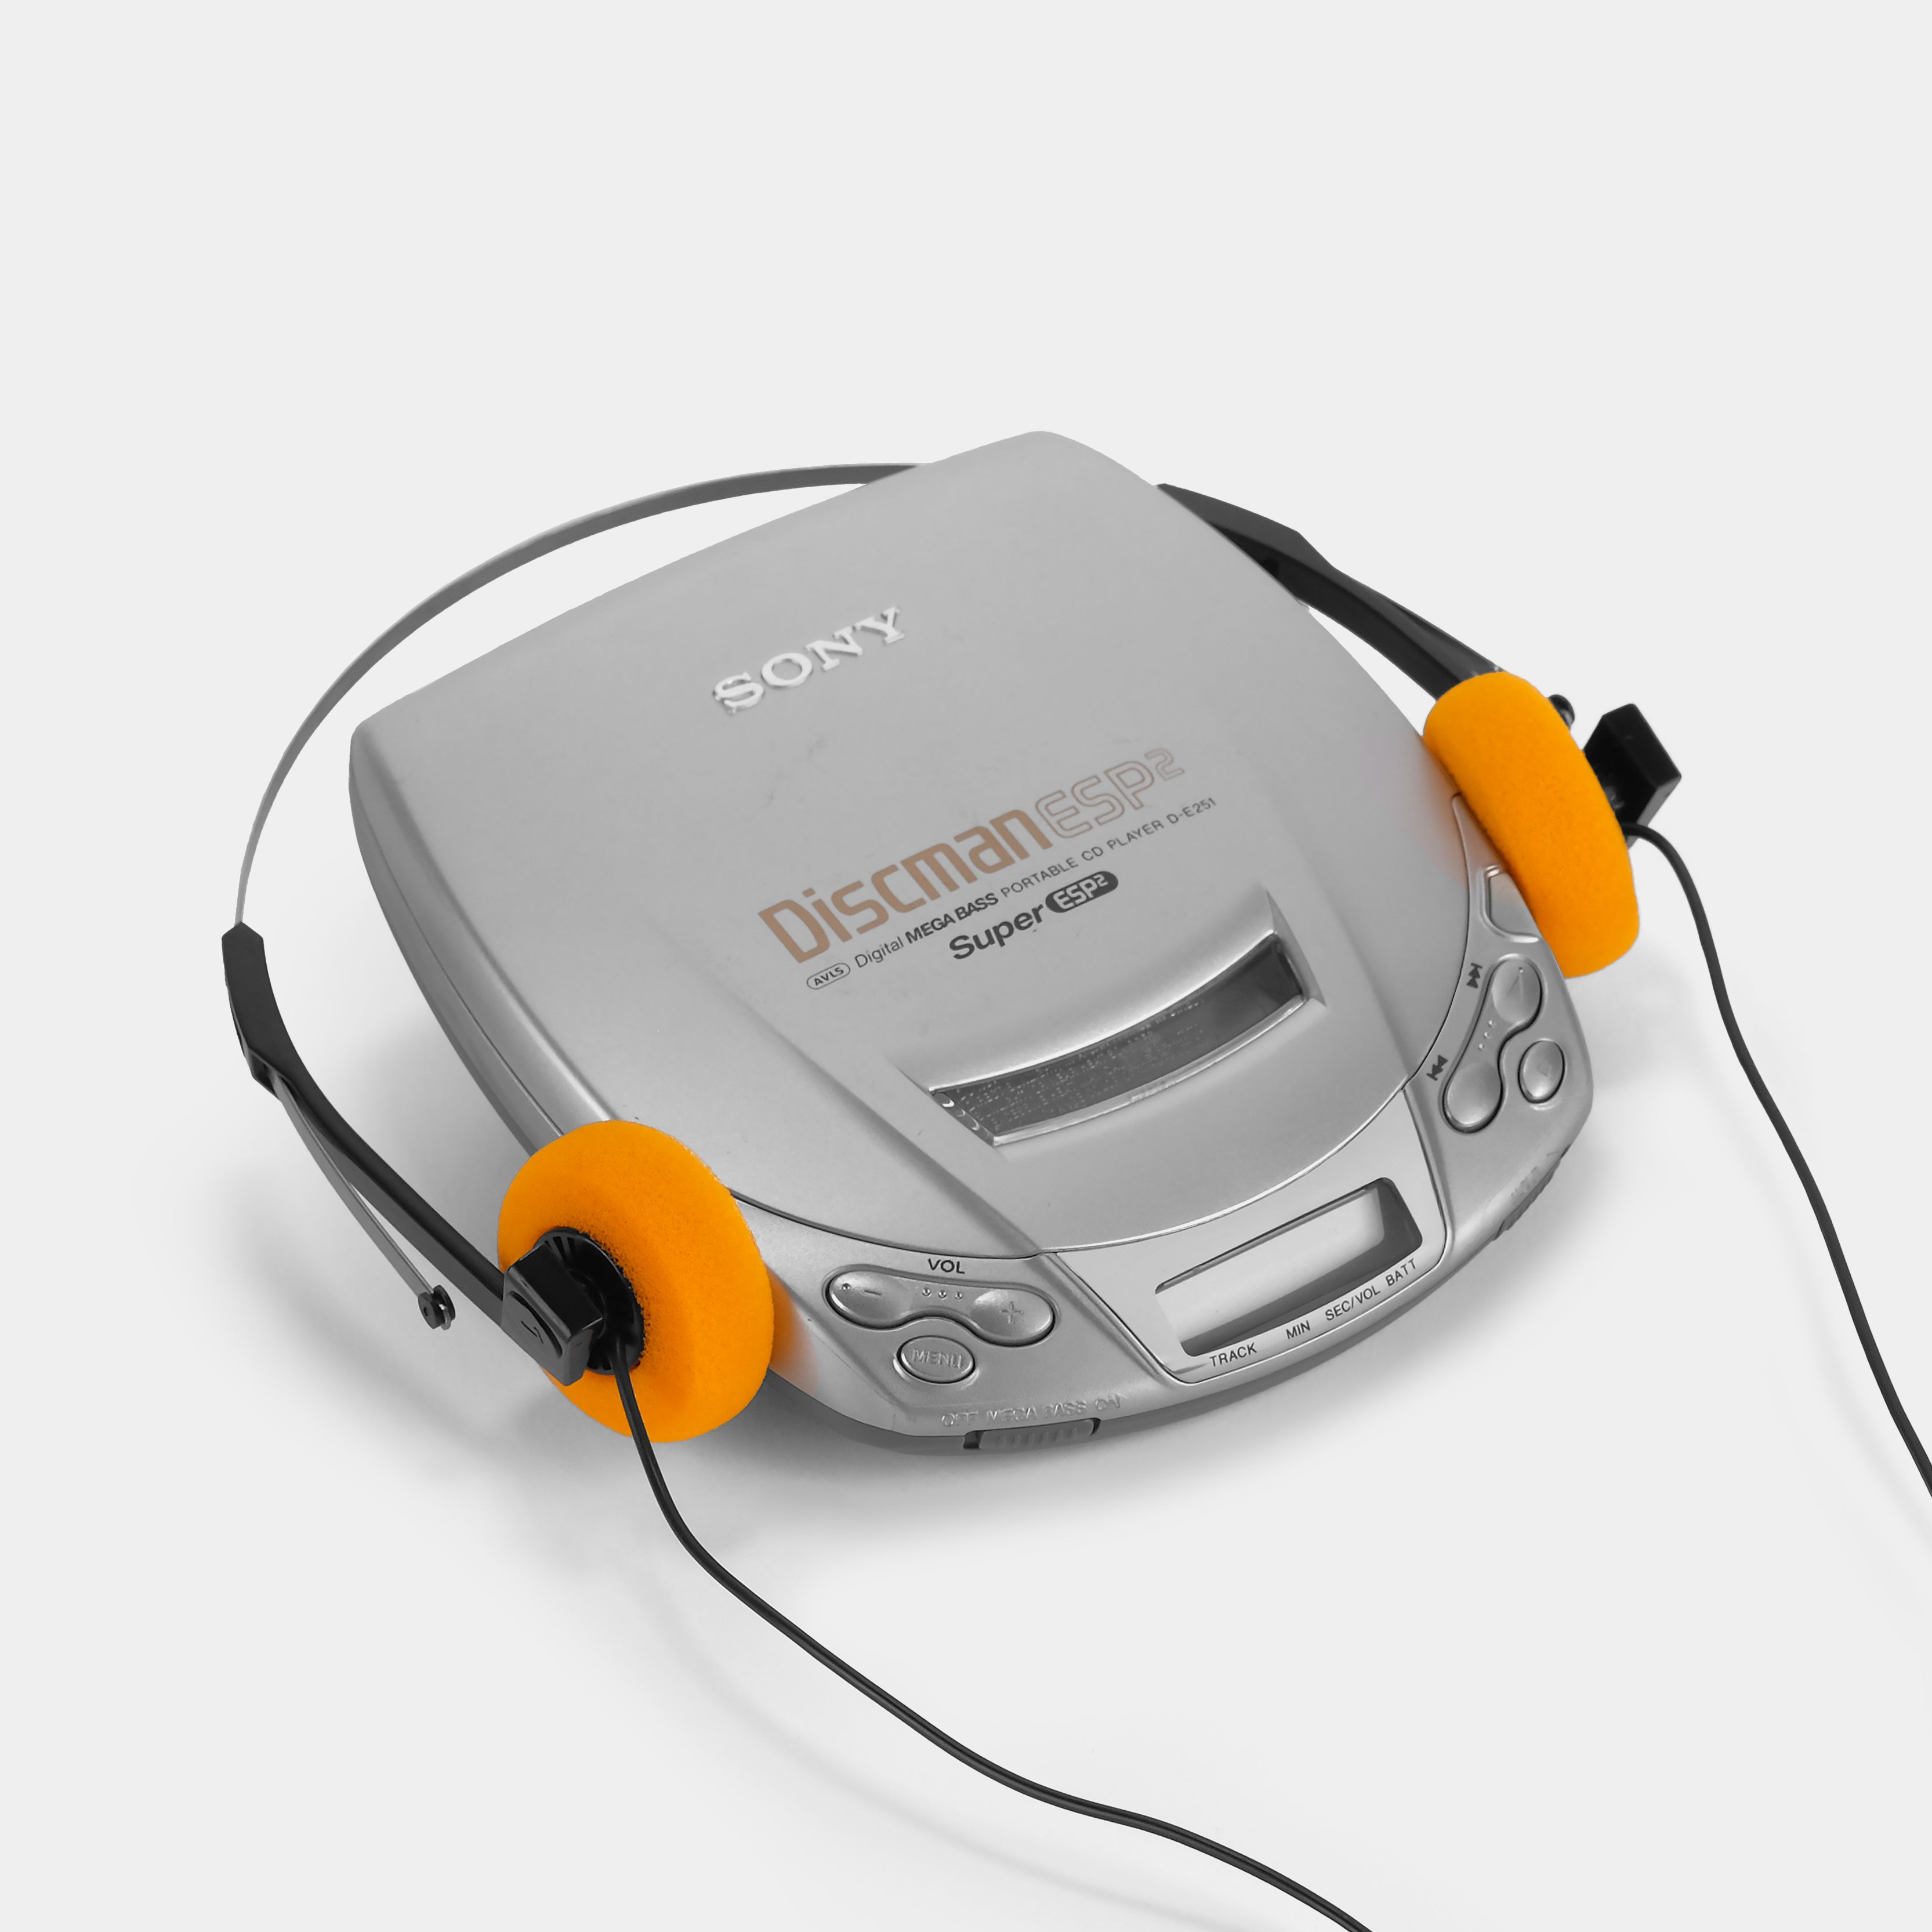 Sony Discman D-E251 Portable CD Player